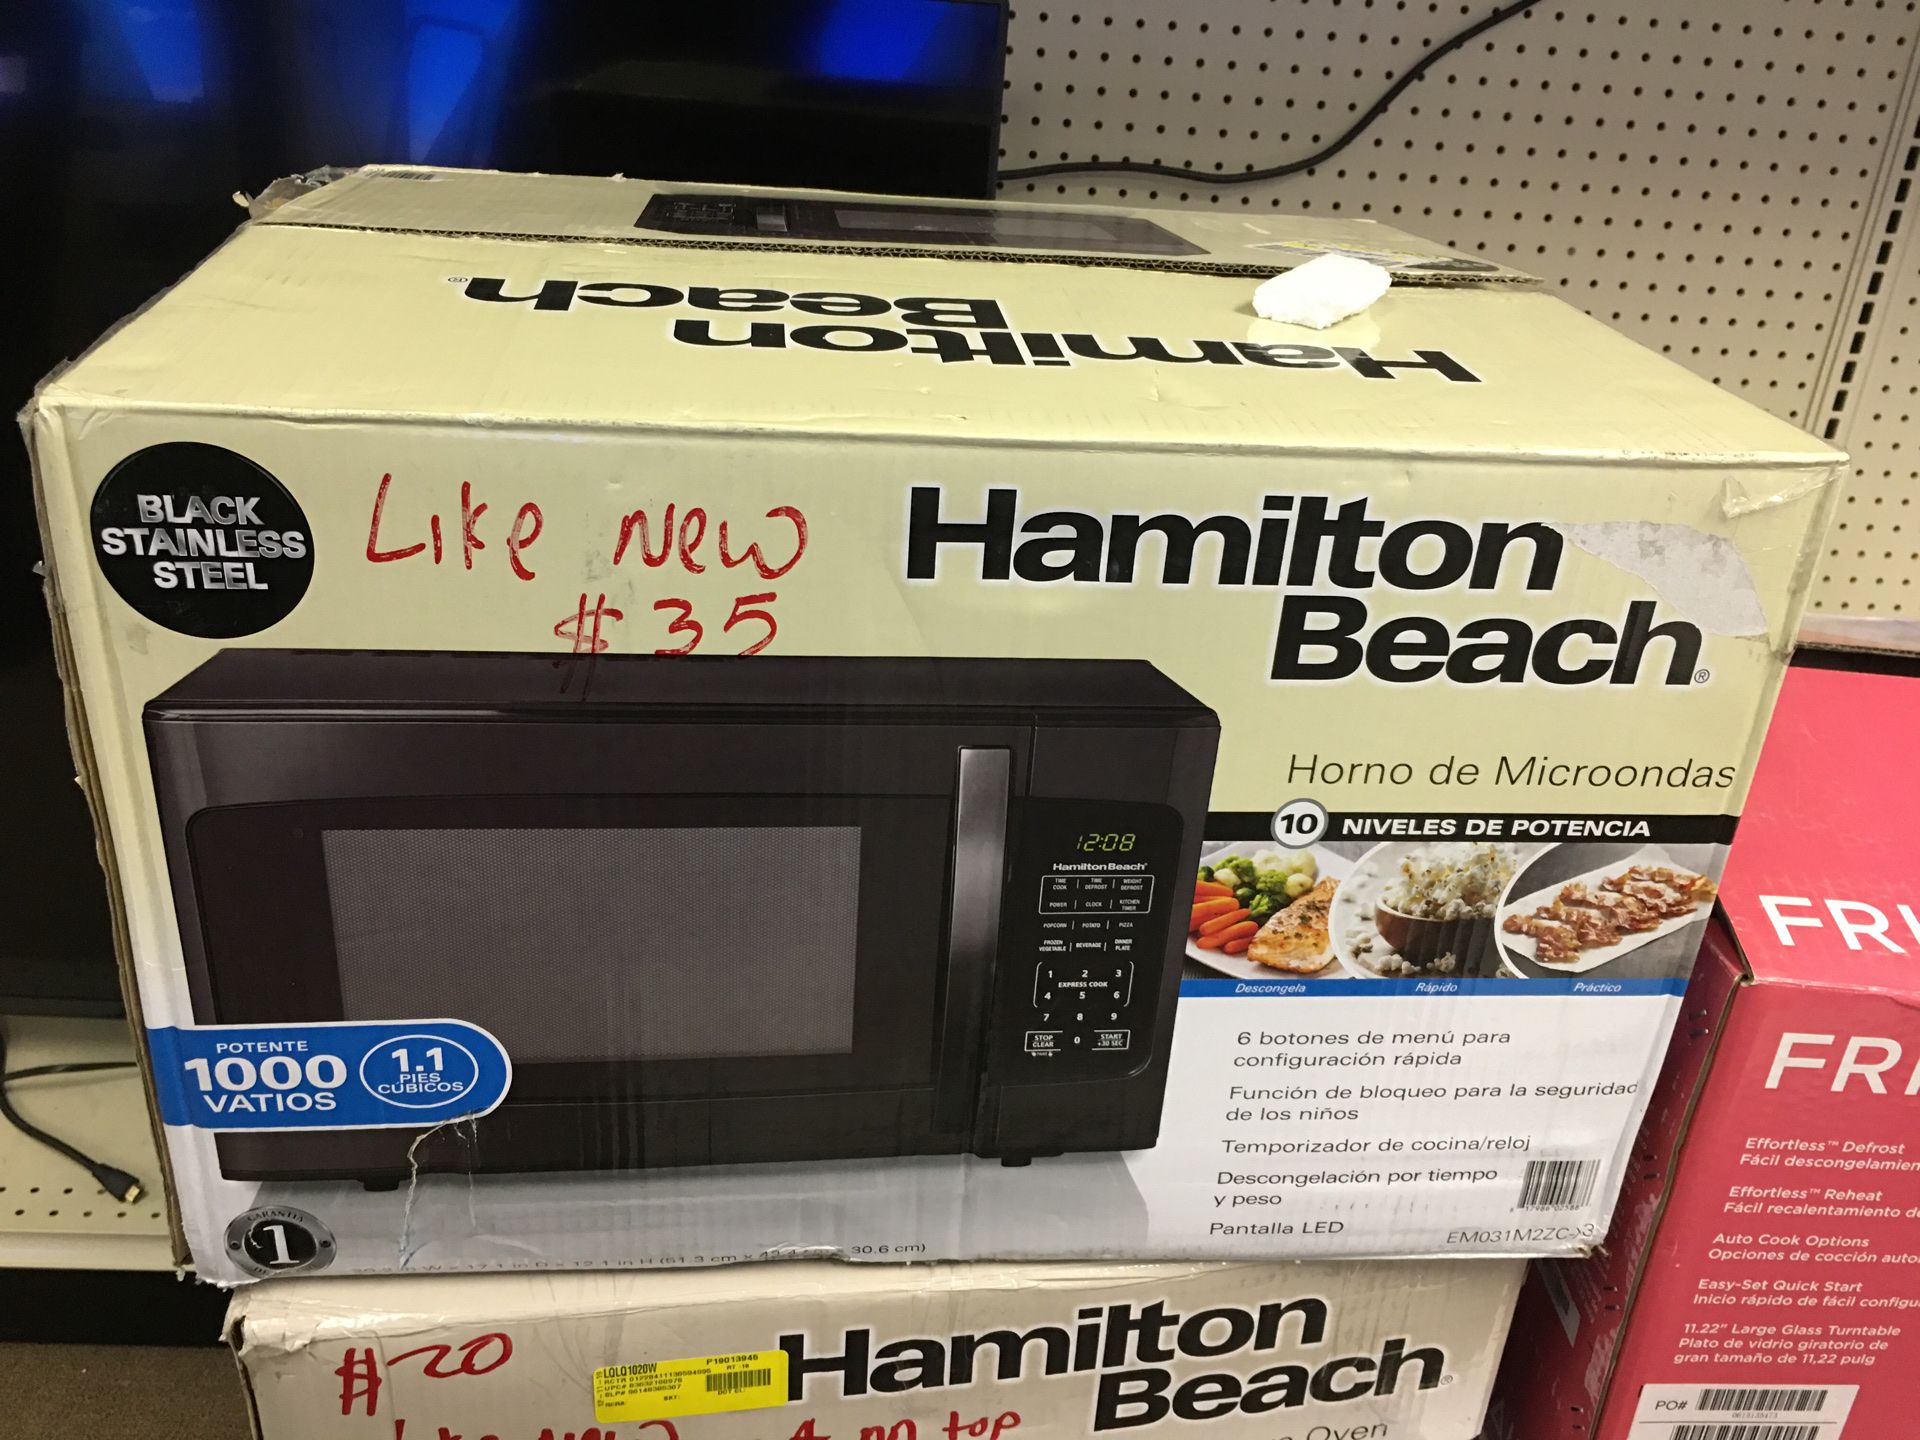 Walmart: Hamilton Beach Microwave Oven Only $35